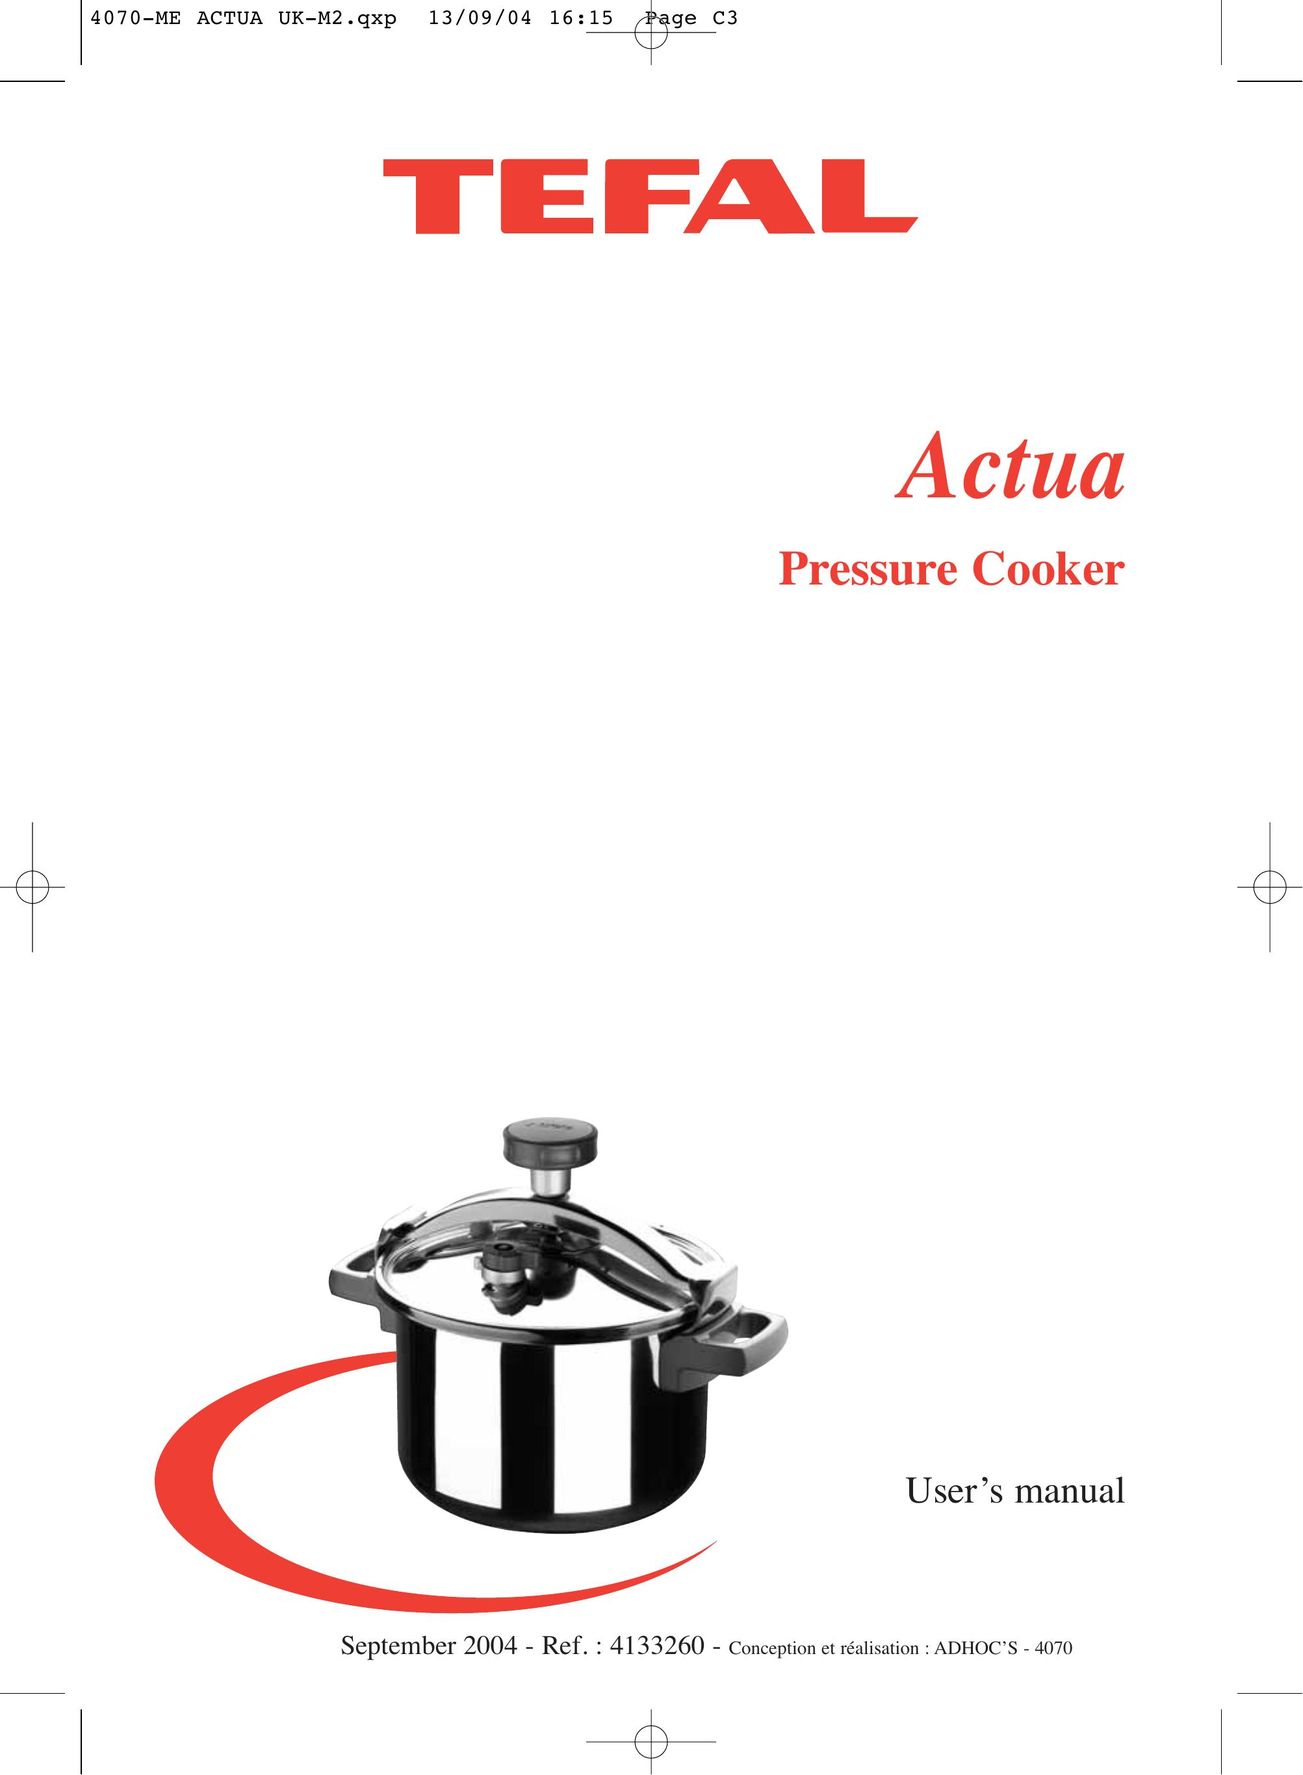 Groupe SEB USA - T-FAL Pressure Cooker Electric Pressure Cooker User Manual